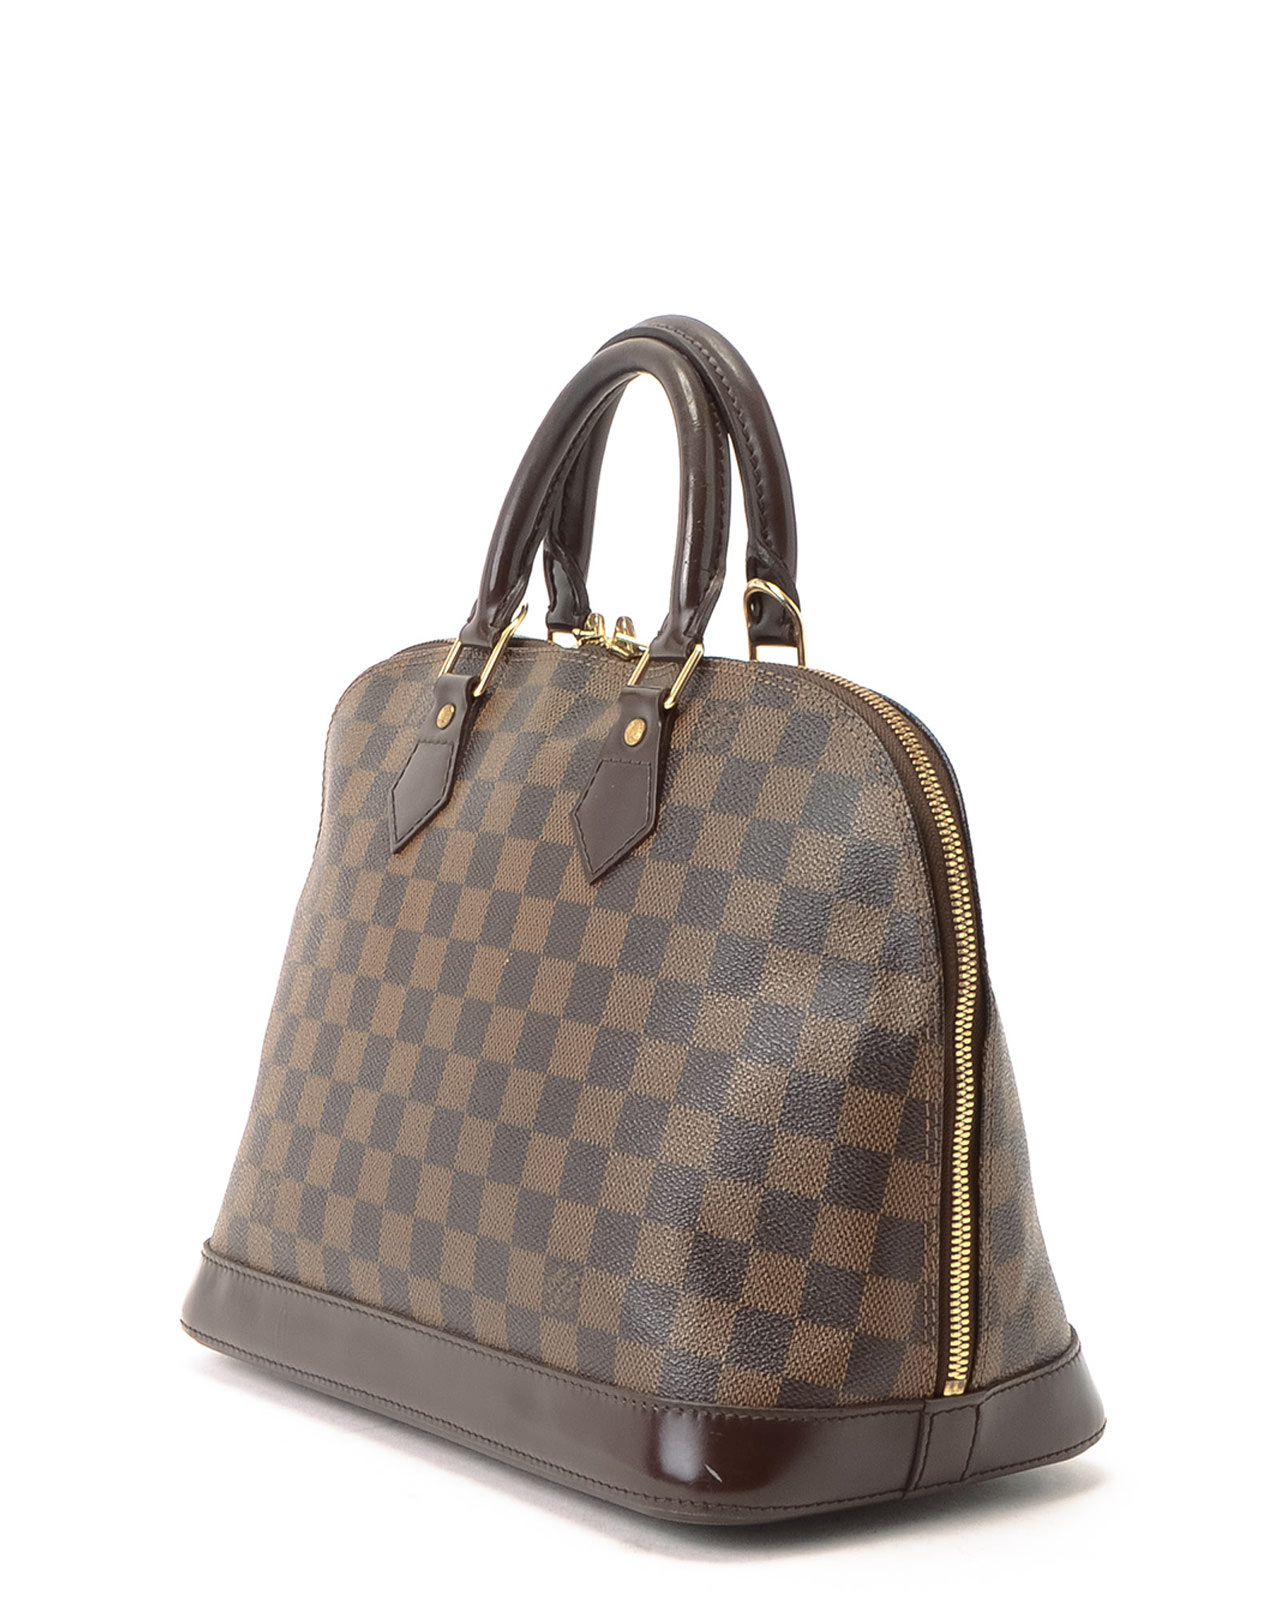 Lyst - Louis Vuitton Damier Ebene Alma Handbag in Brown